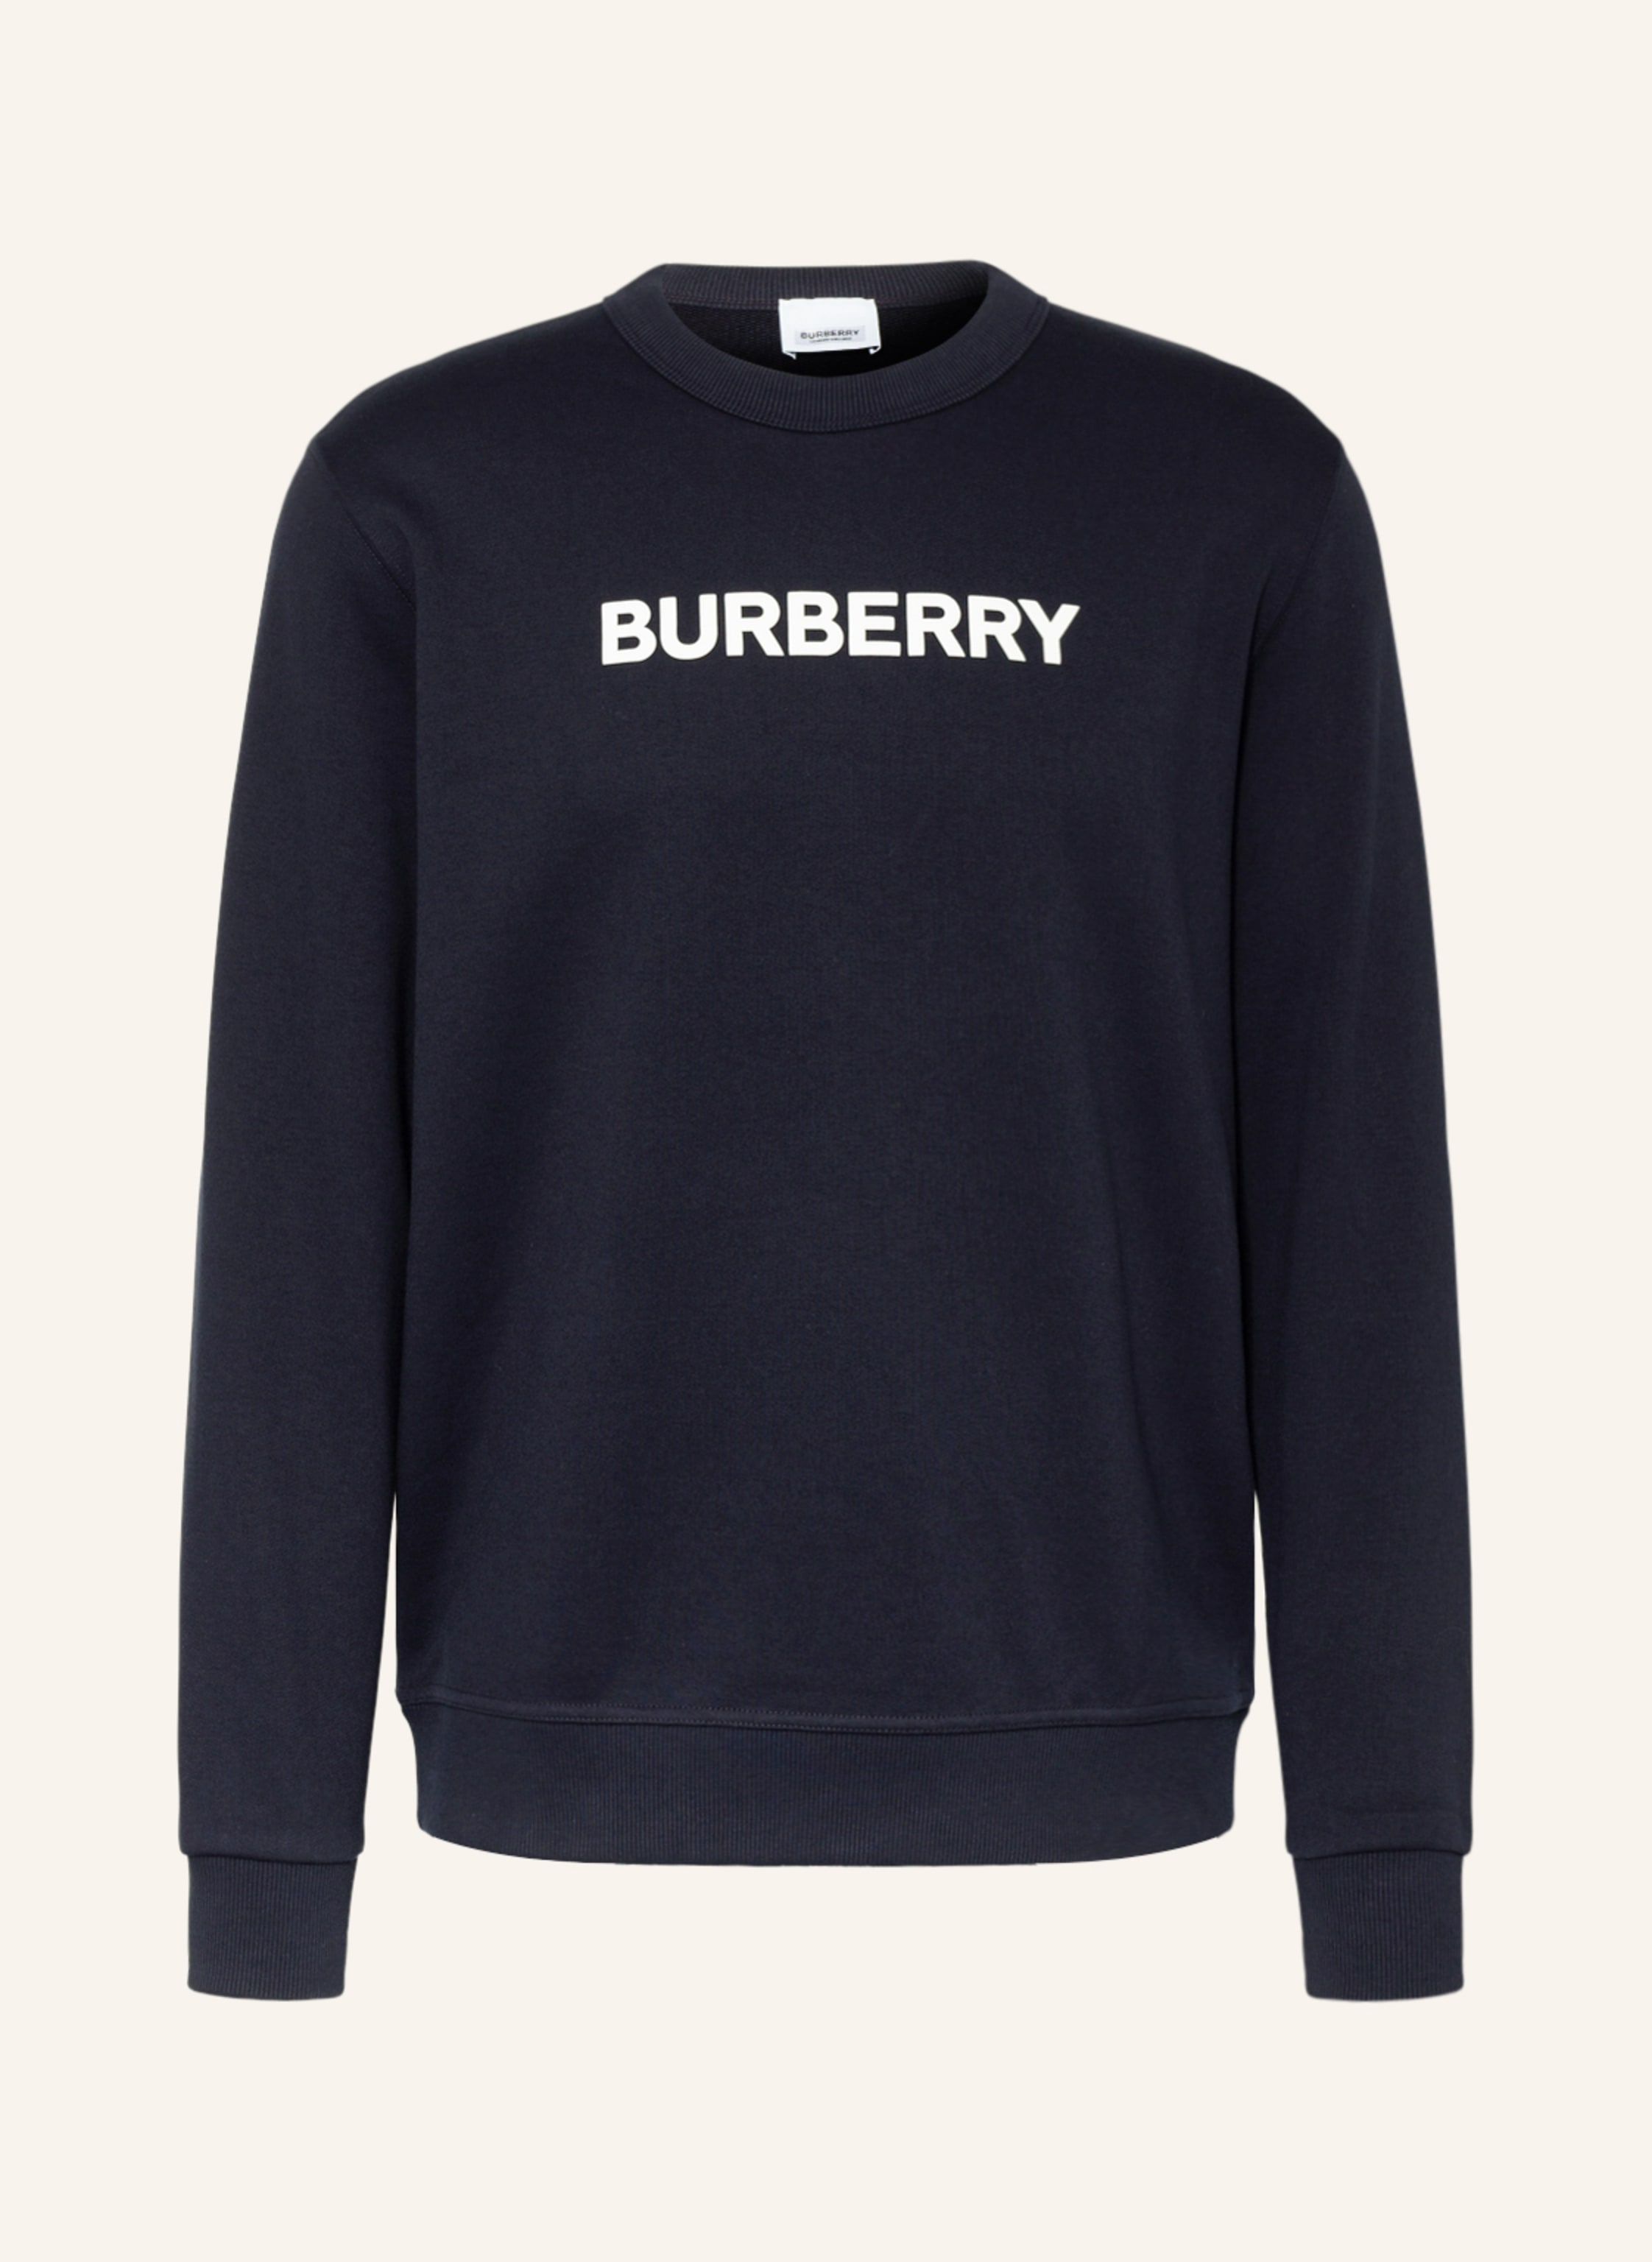 Arriba 78+ imagen cheap burberry sweatshirt